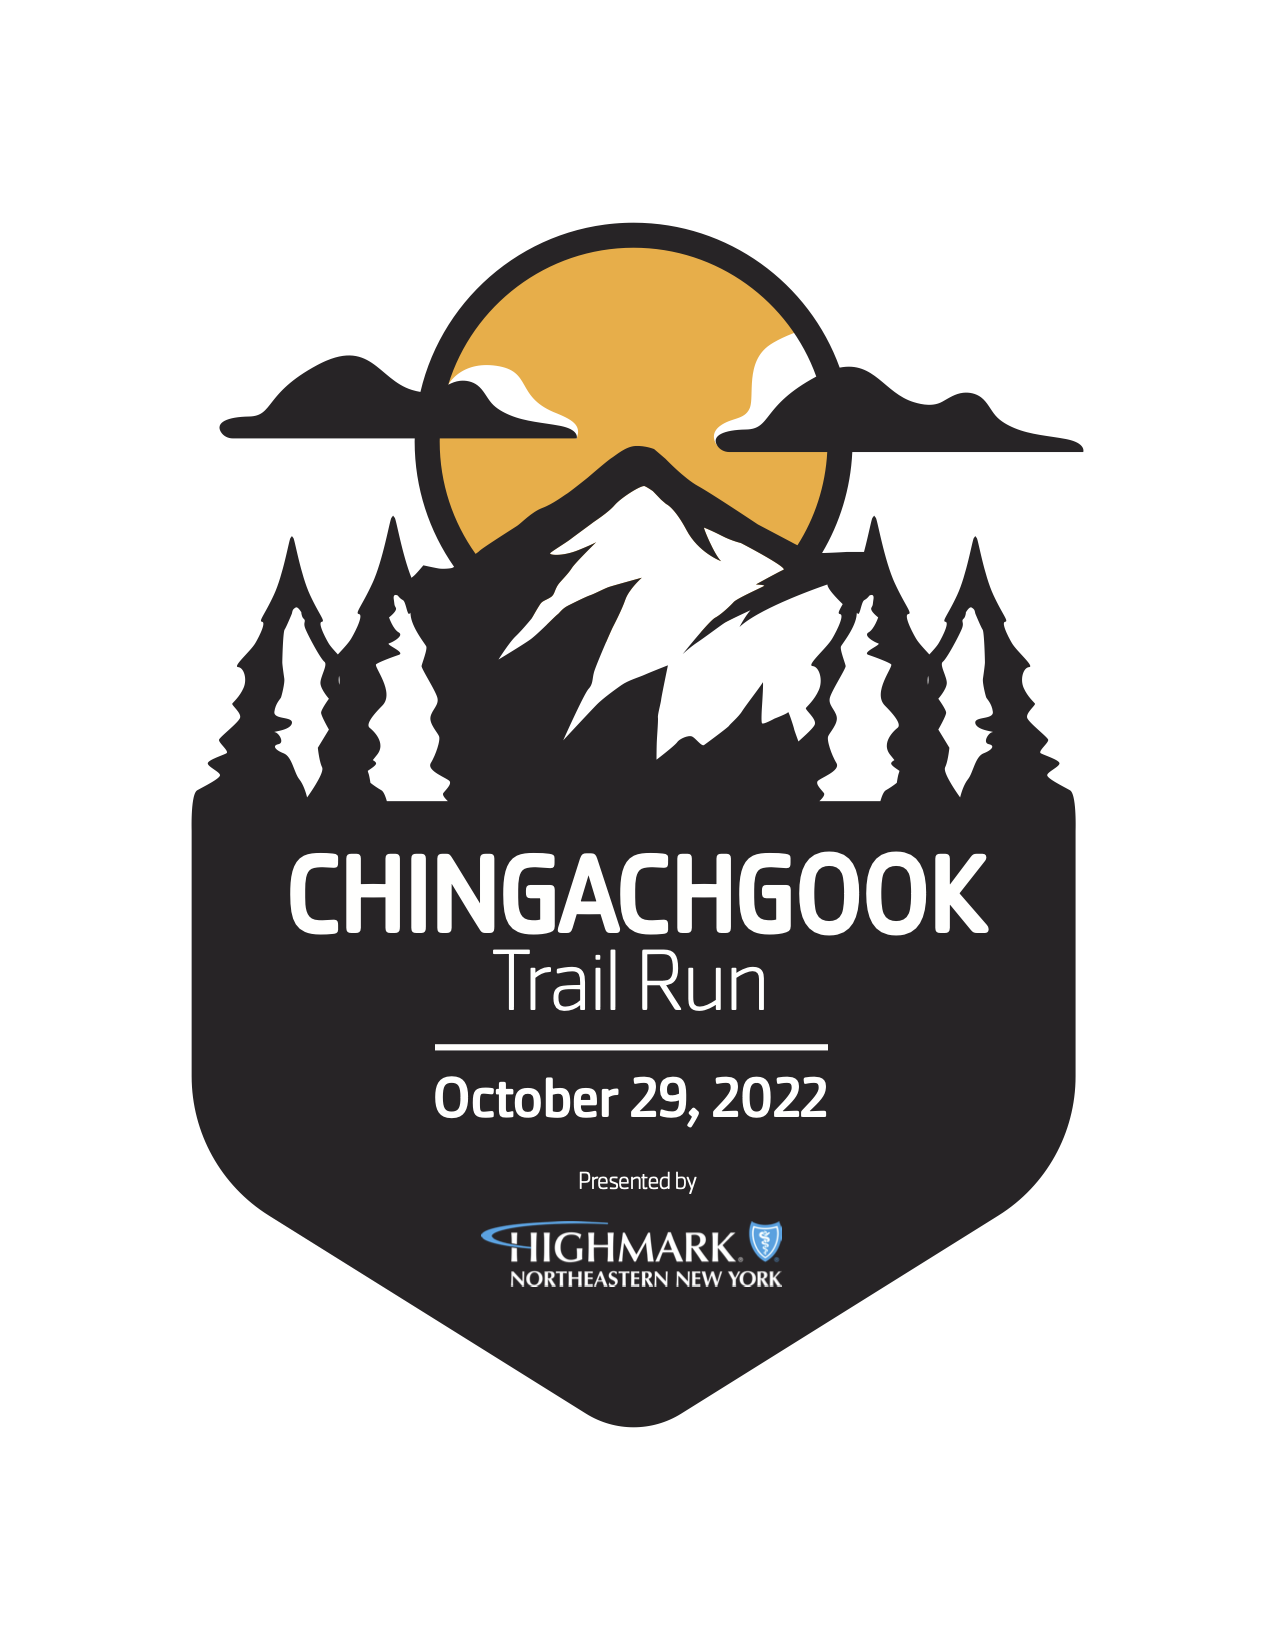 Camp Chingachgook Trail Run Registration Page